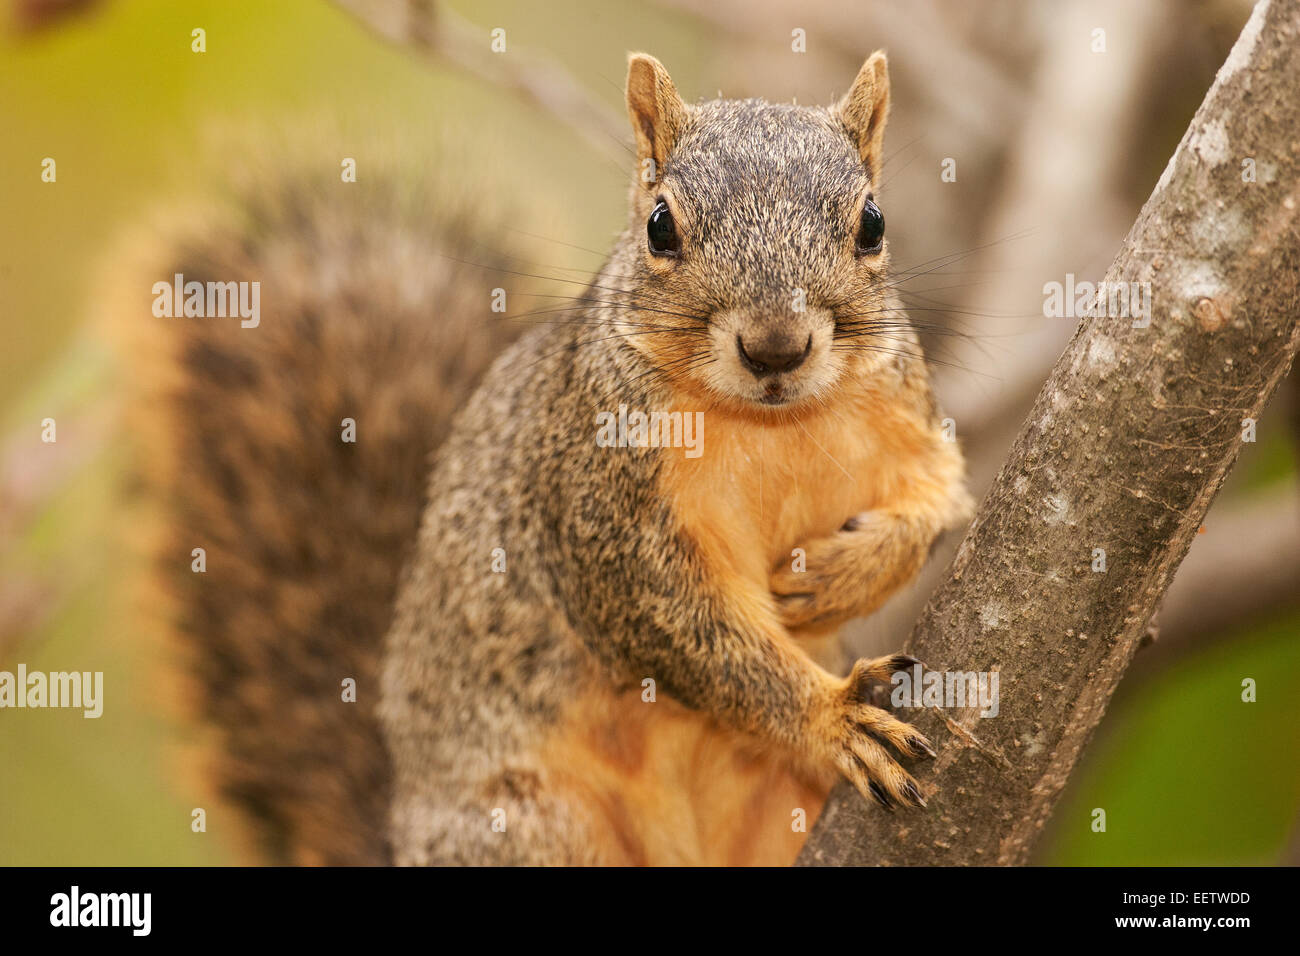 Eastern Fox Squirrel climbing a tree in a backyard in Houston, Texas Stock Photo